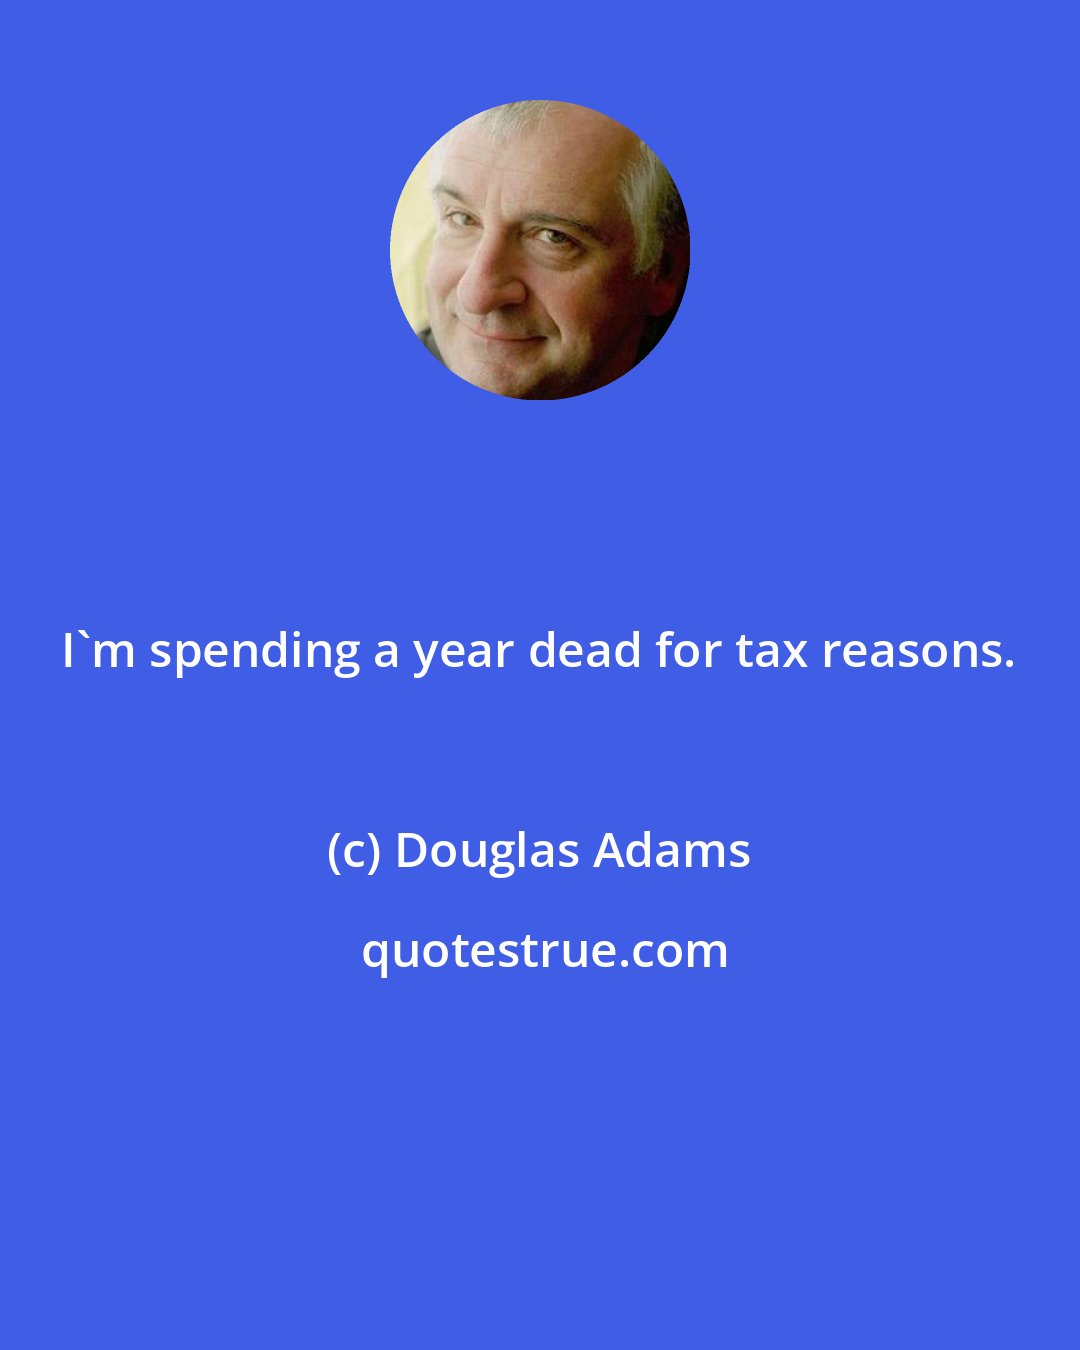 Douglas Adams: I'm spending a year dead for tax reasons.